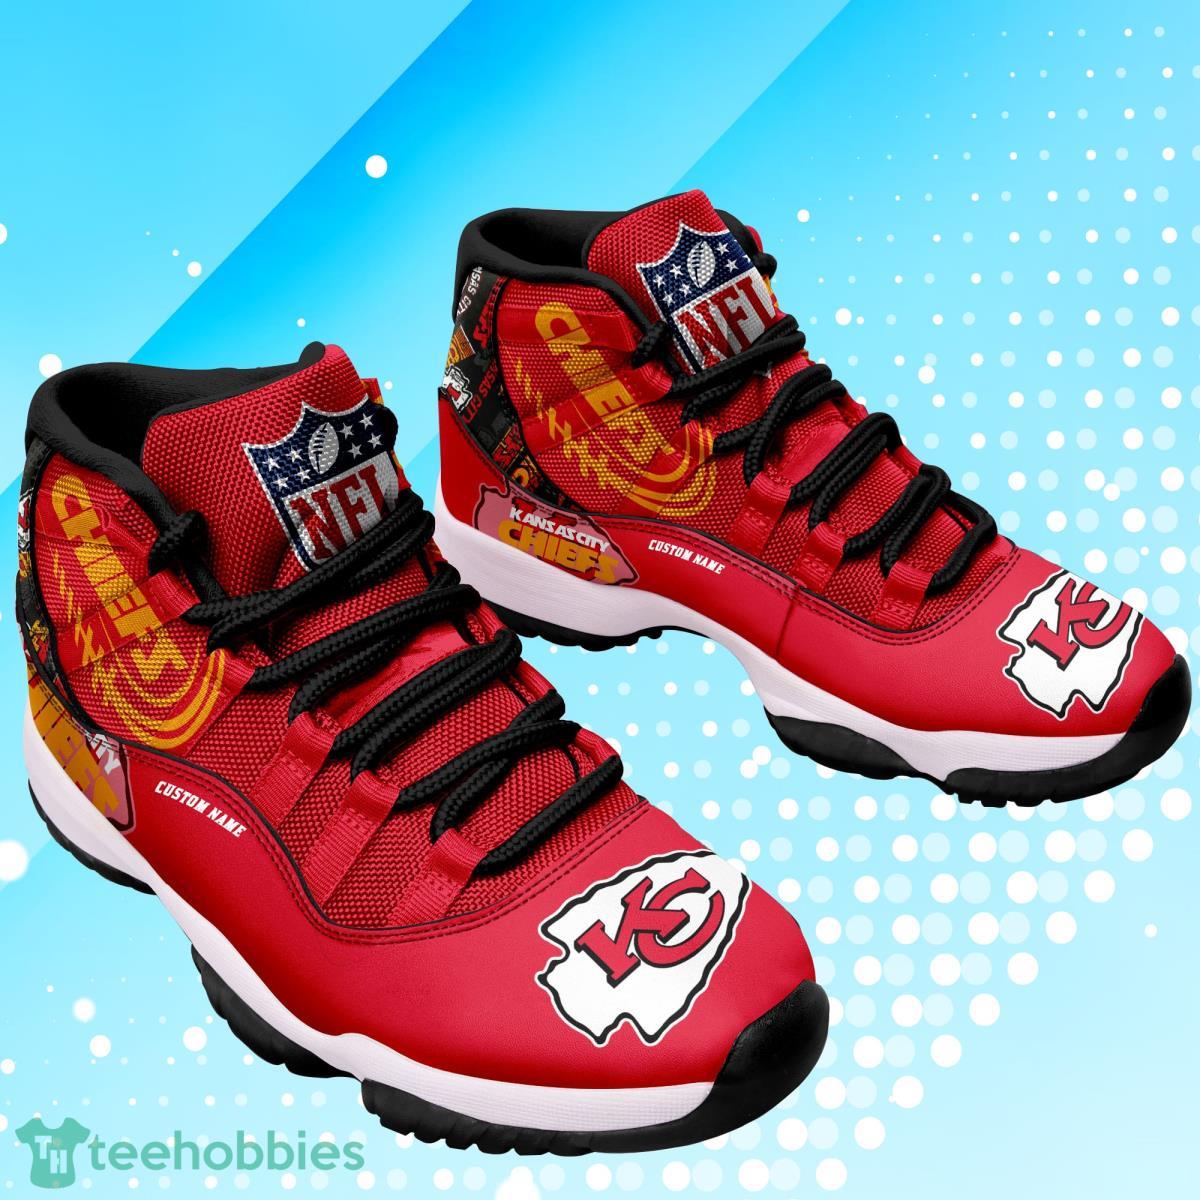 Custom Name Kansas City Chiefs Jordan 13 Sneaker Shoes - Banantees